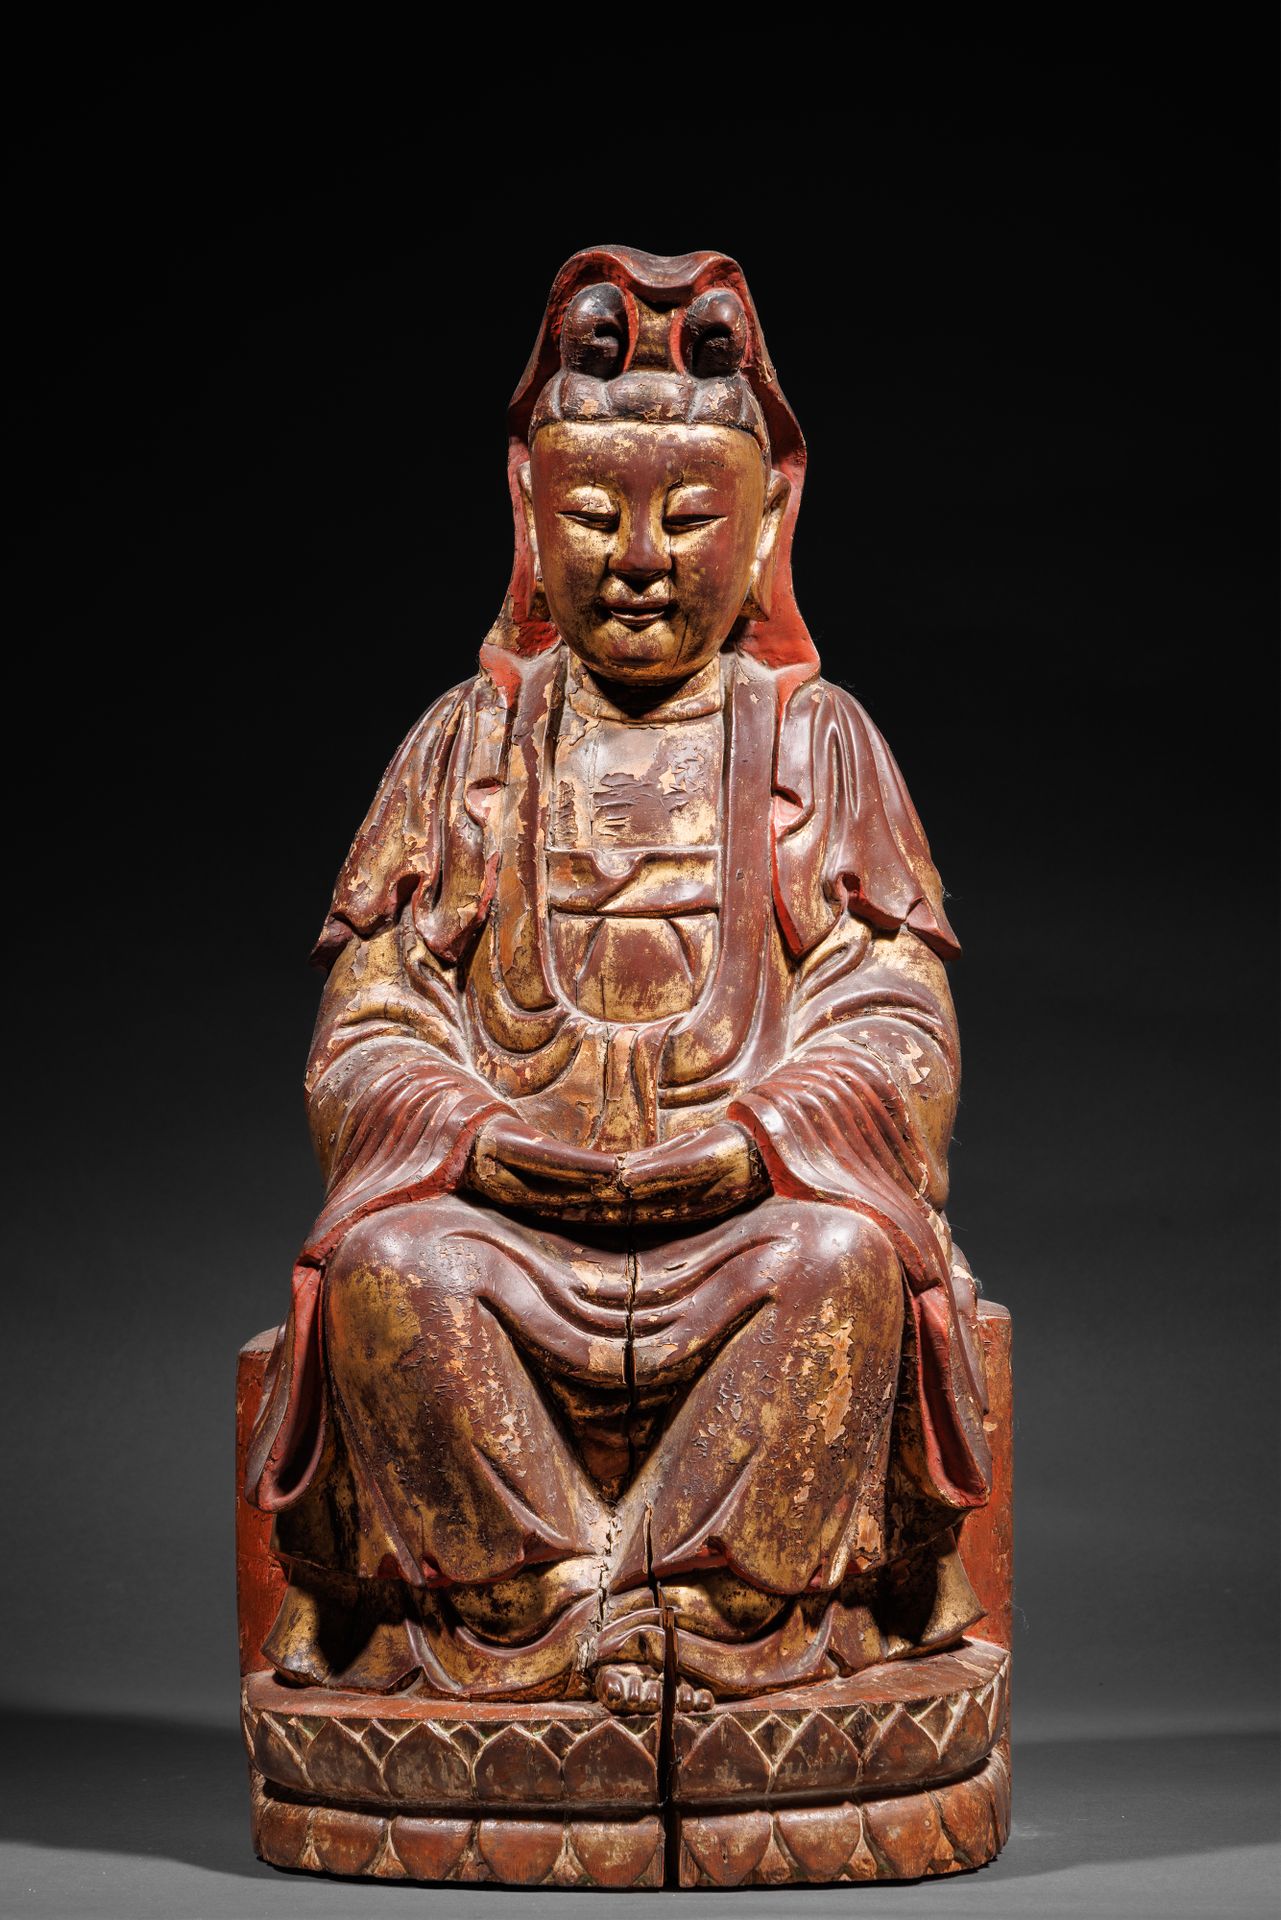 Null 重要的雕像
漆器和镀金木雕，表现观音坐在宝座上打坐的样子
王位
中国南部，19世纪
高度：67厘米